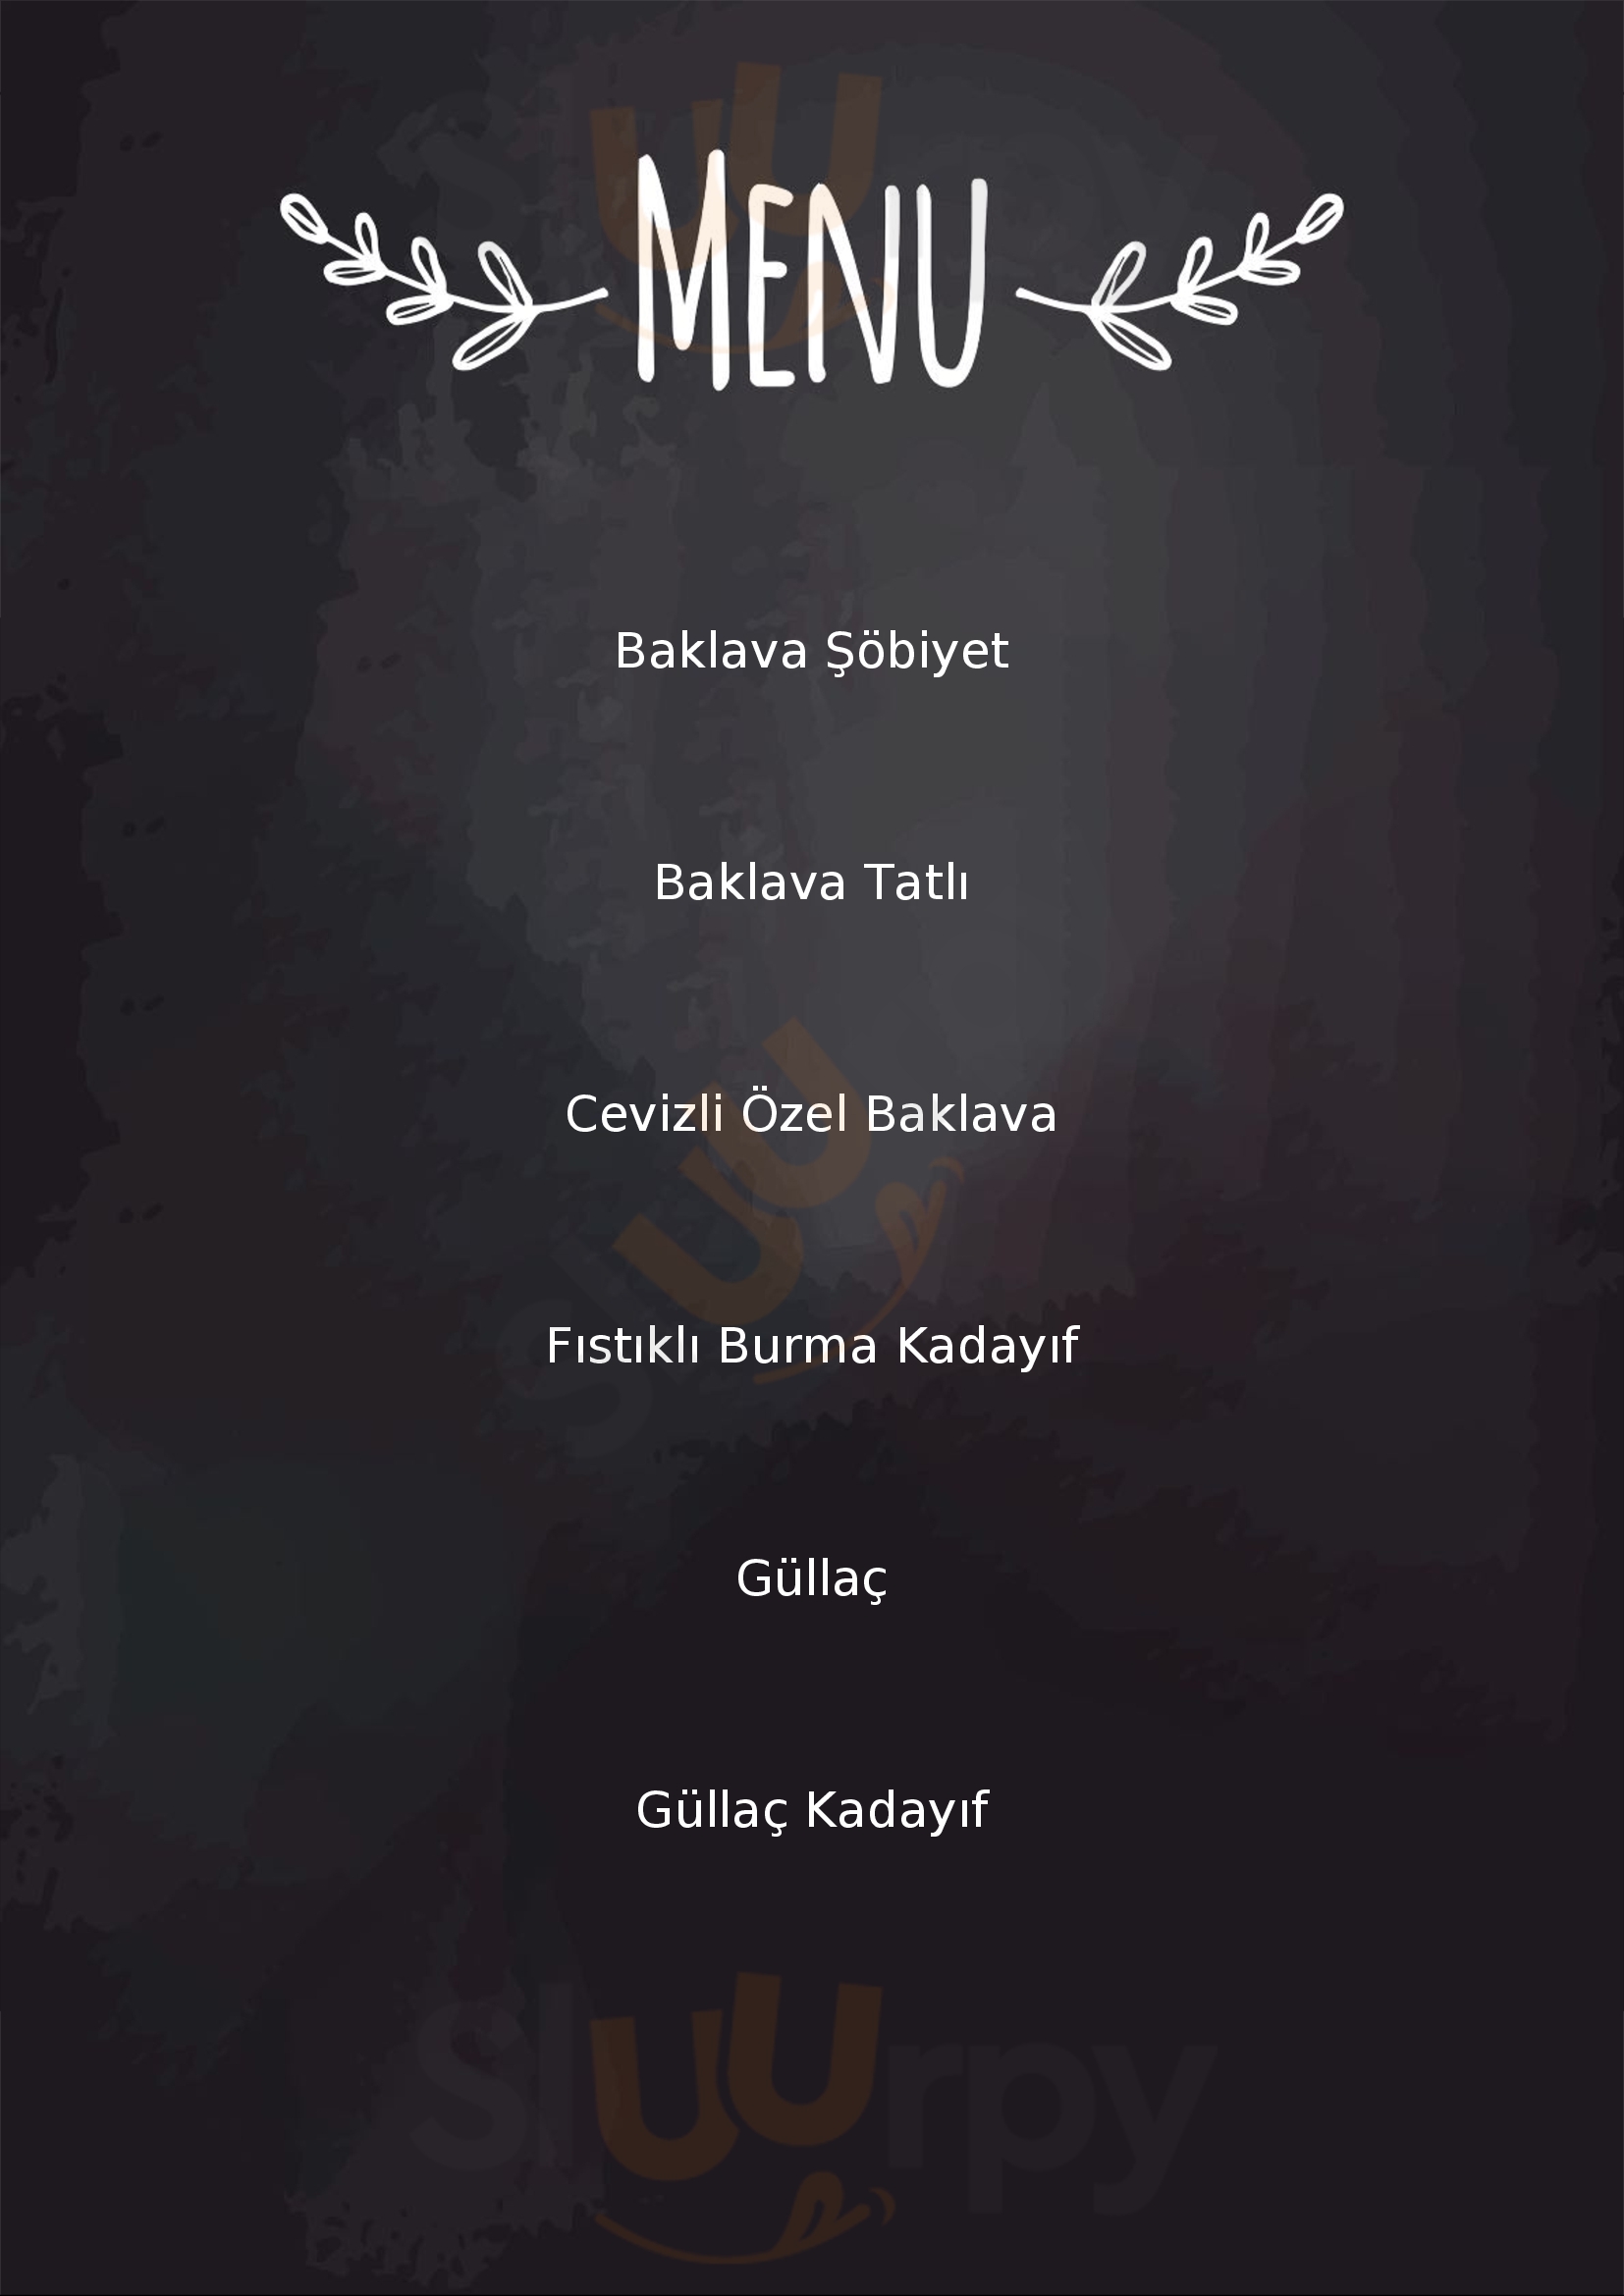 Oz Karagoz Baklavalari İzmir Menu - 1